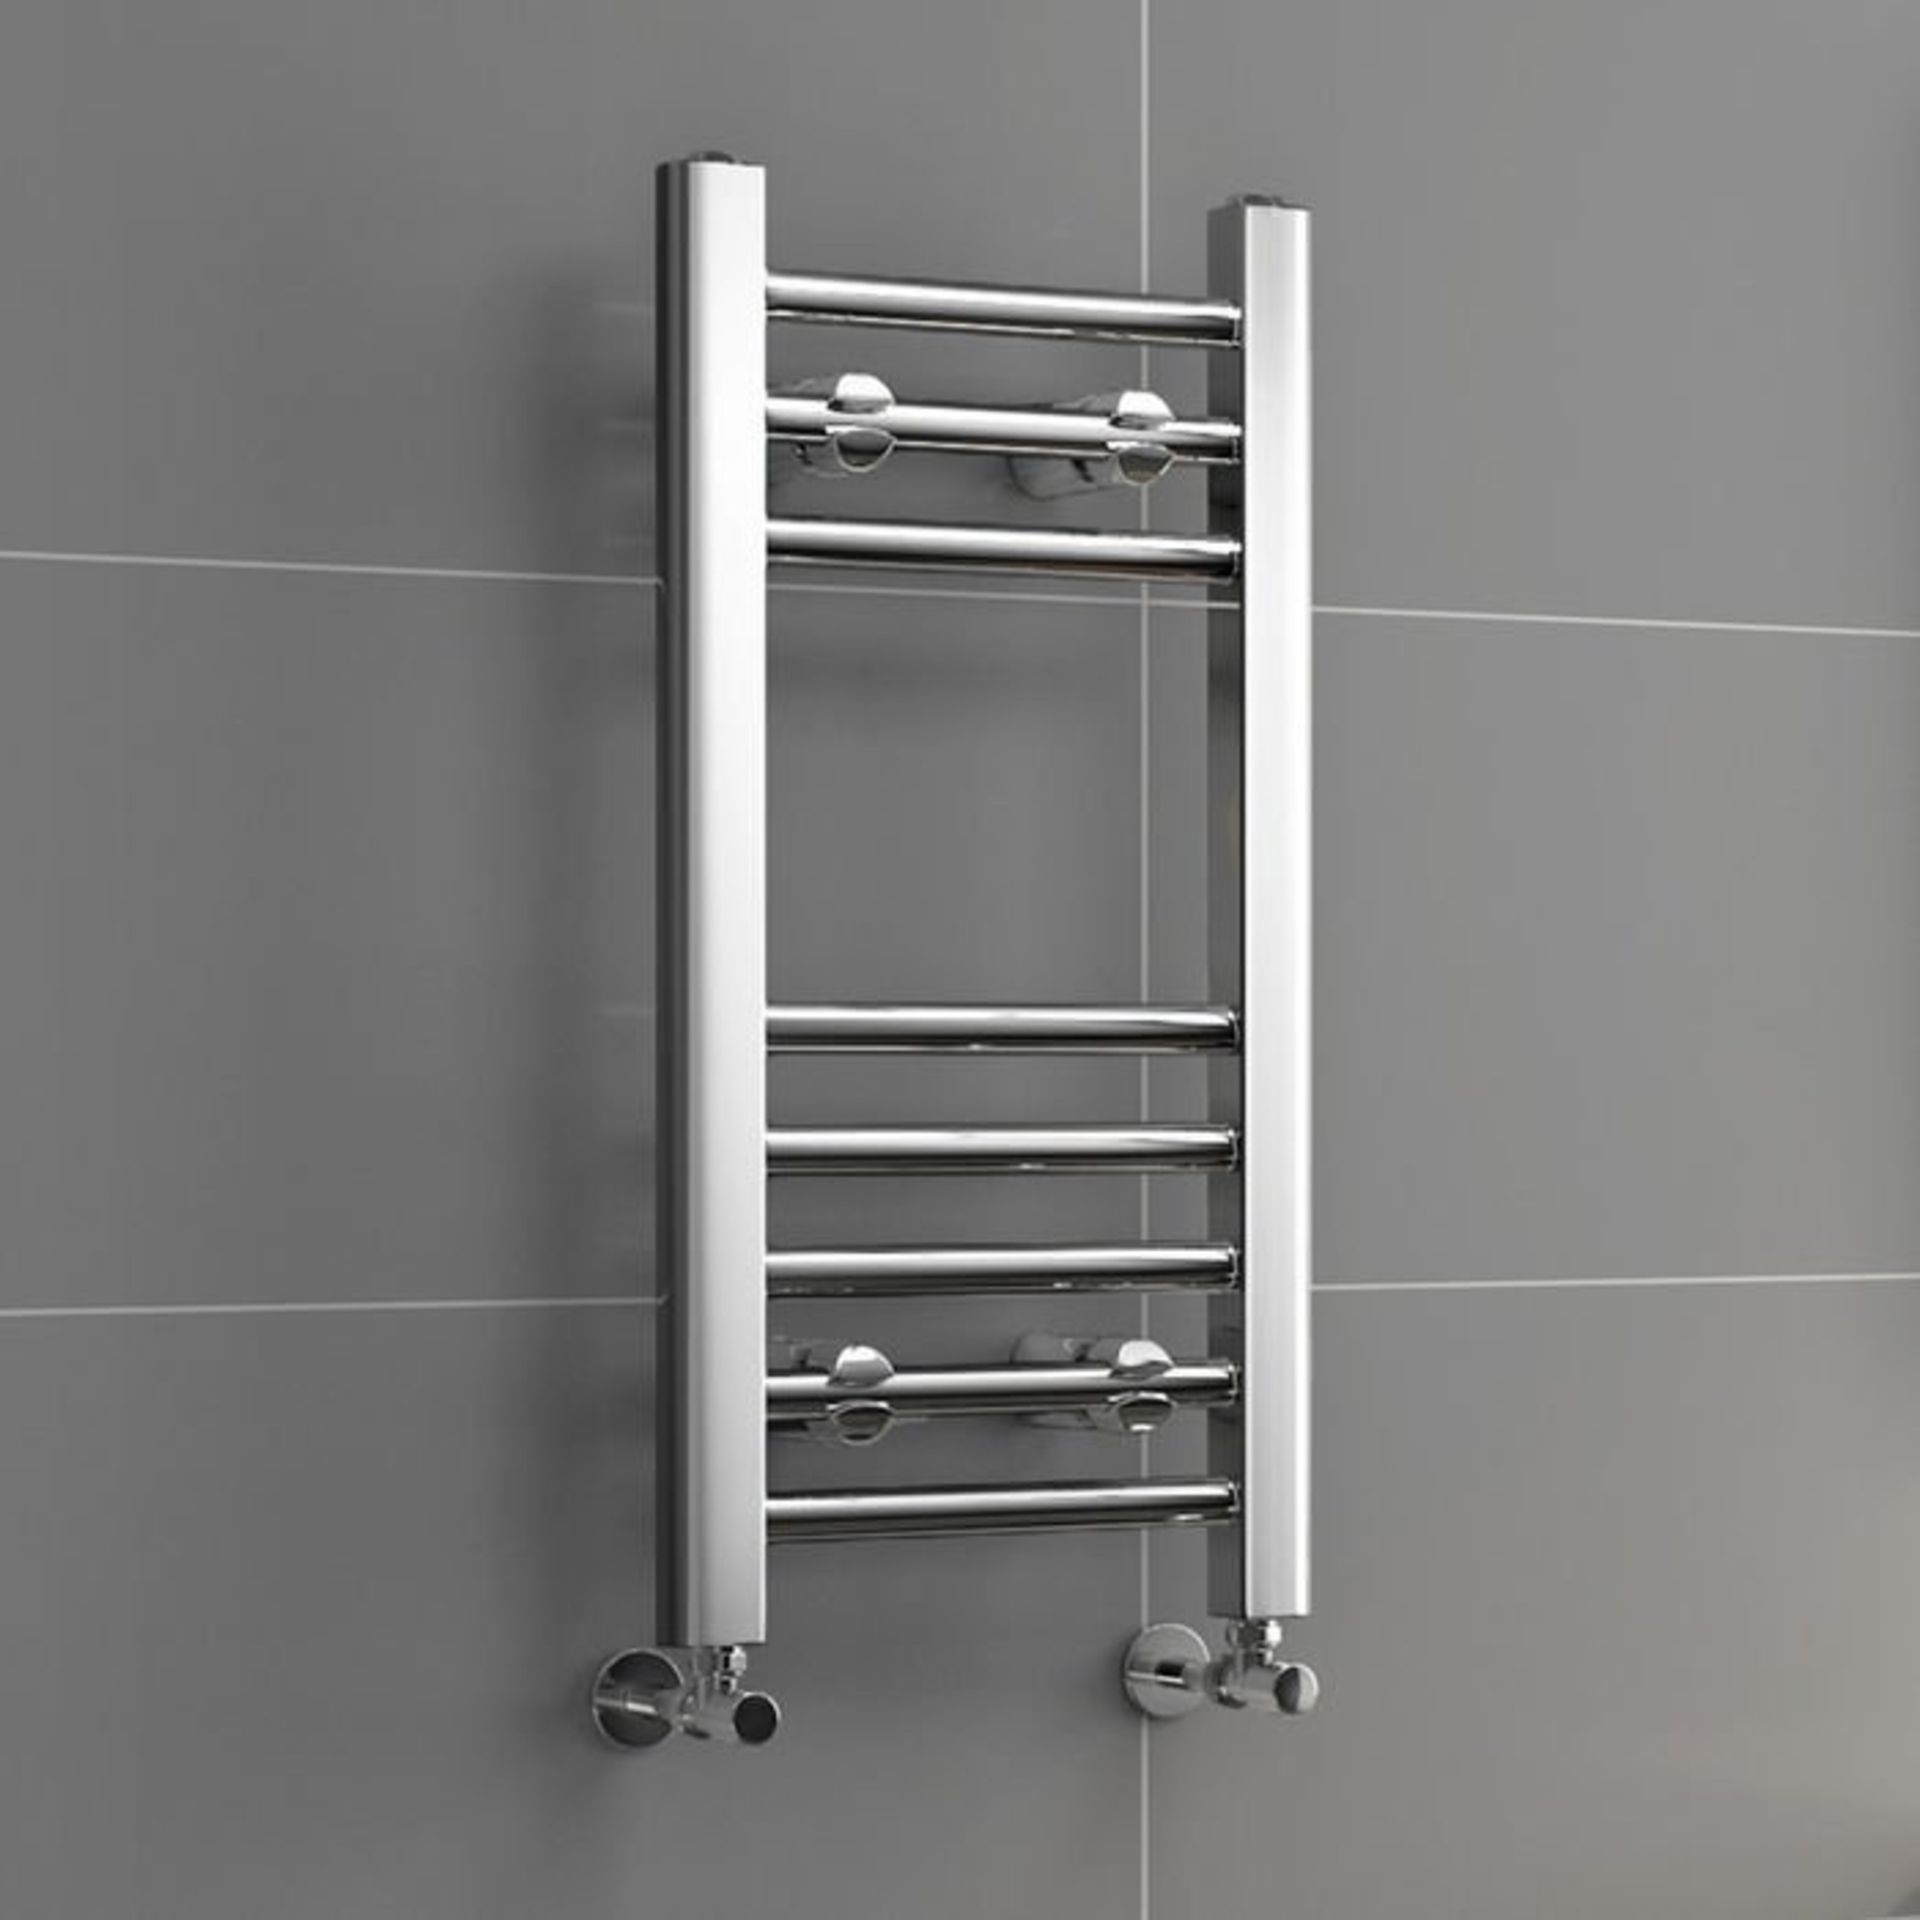 (G2) 600x300mm - 20mm Tubes - Chrome Heated Straight Rail Ladder Towel Rail. Low carbon steel chrome